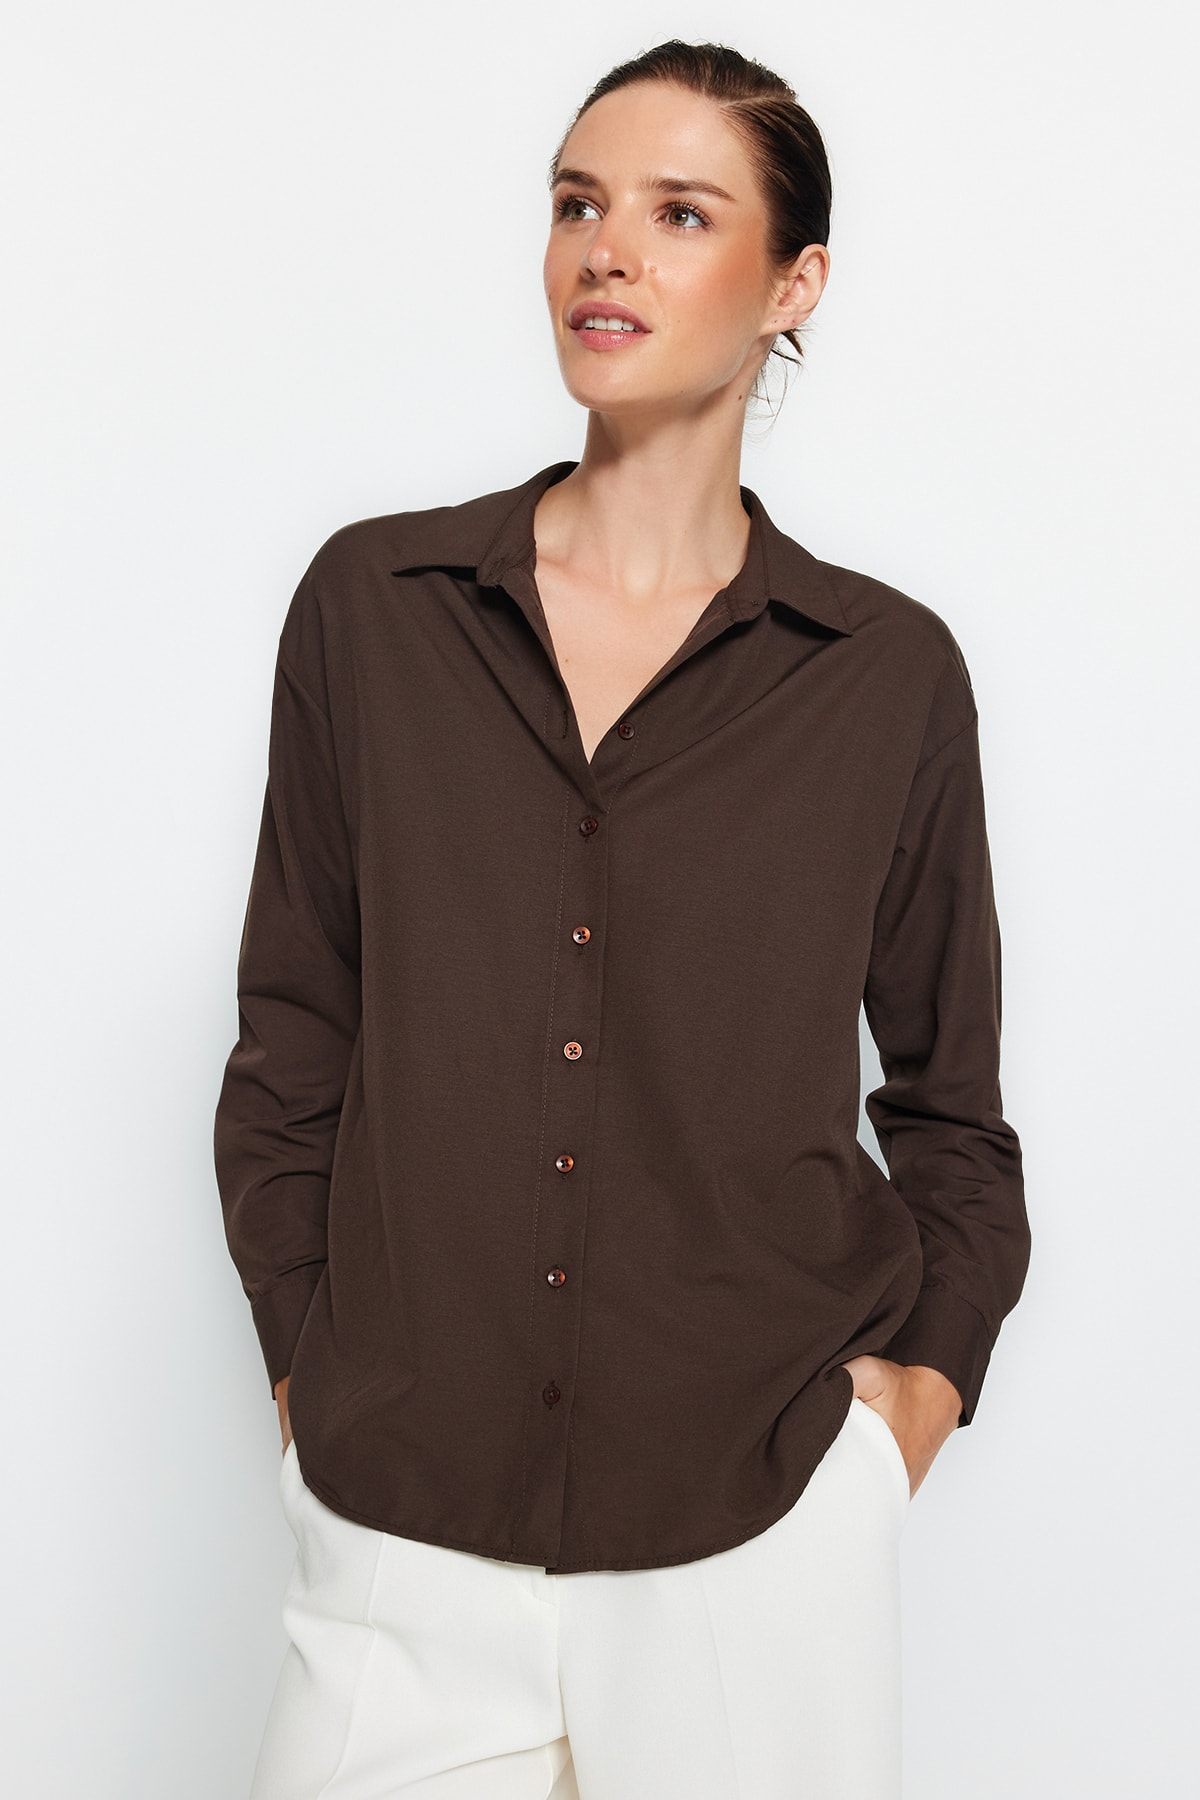 Trendyol Dark Brown Loose Fit Cotton Woven Shirt